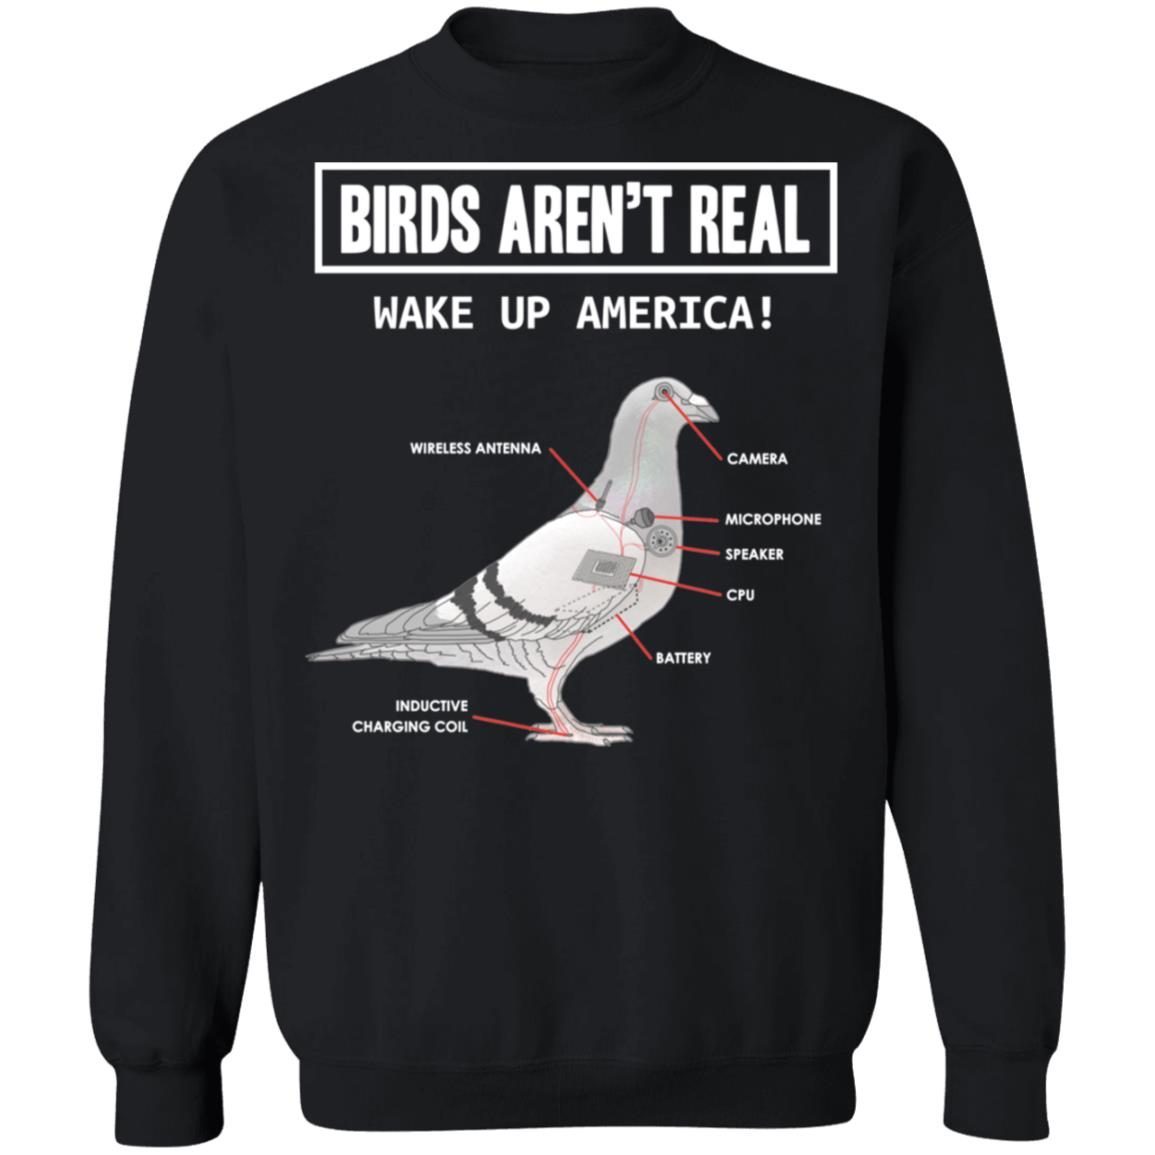 Birds Aren’t Real Make Up America shirt 8